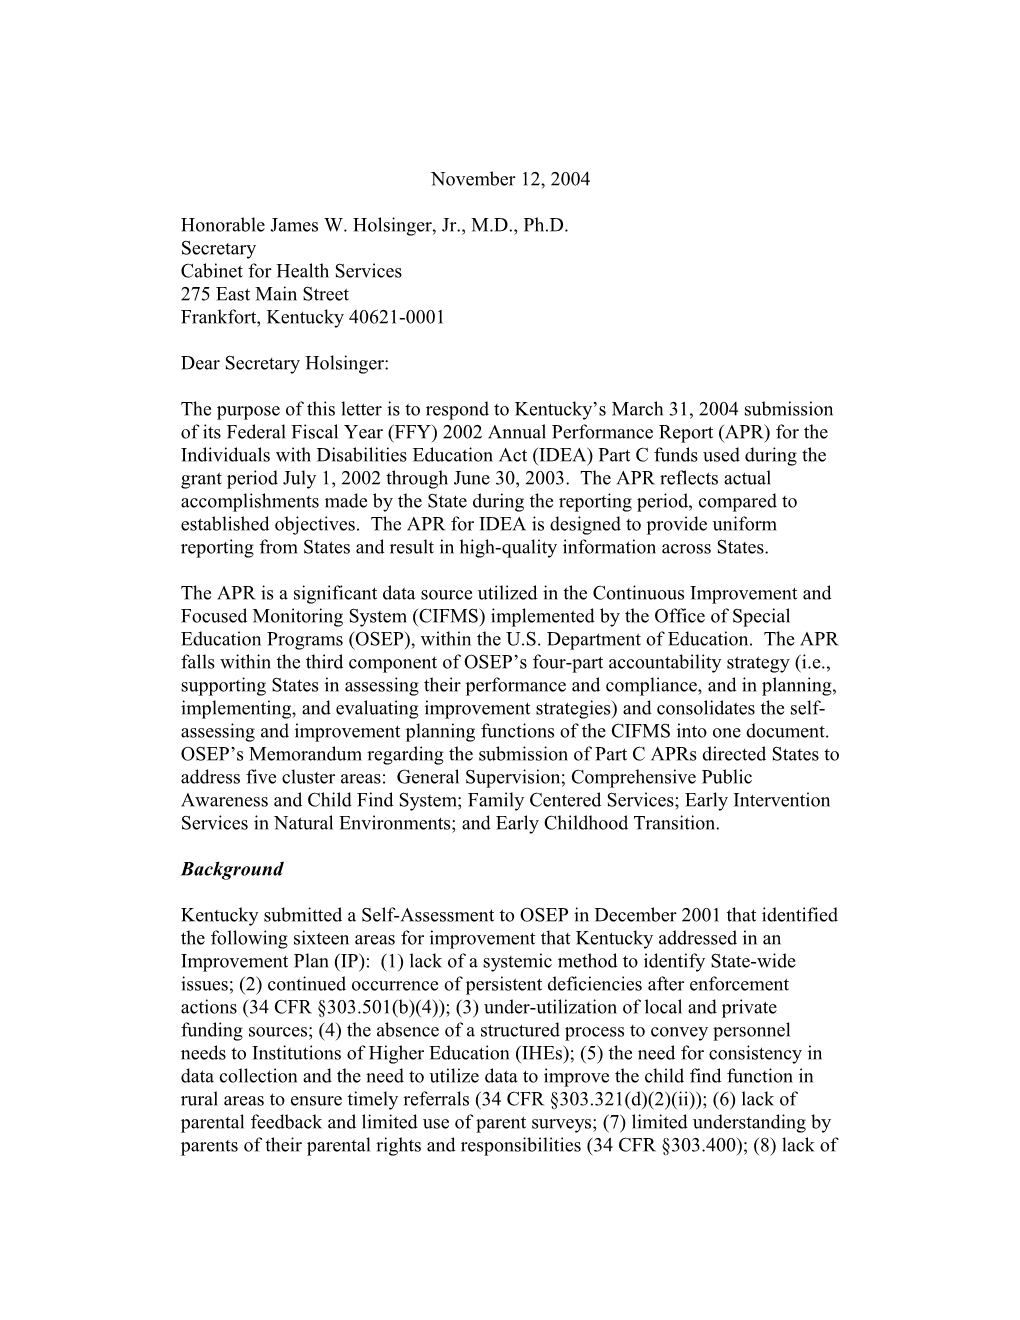 Kentucky Part C APR Letter, 2002-2003 (MS Word)